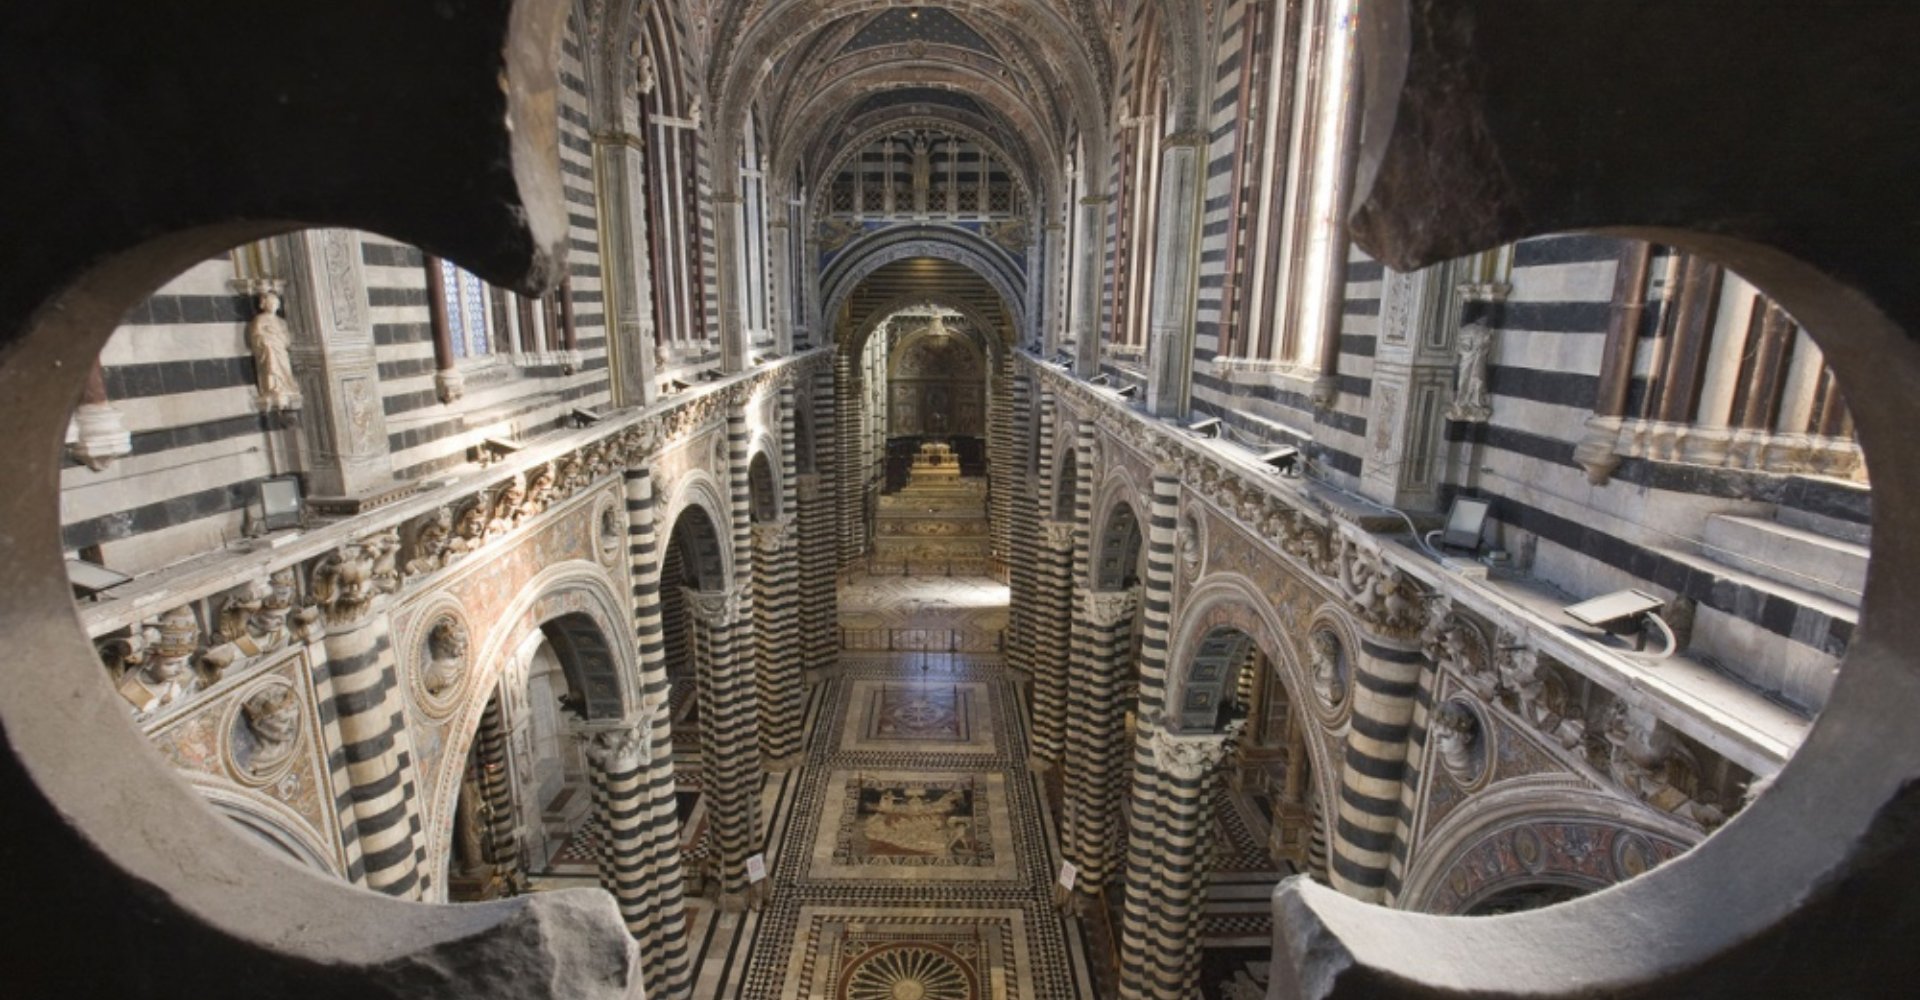 Porta del Cielo, Duomo di Siena